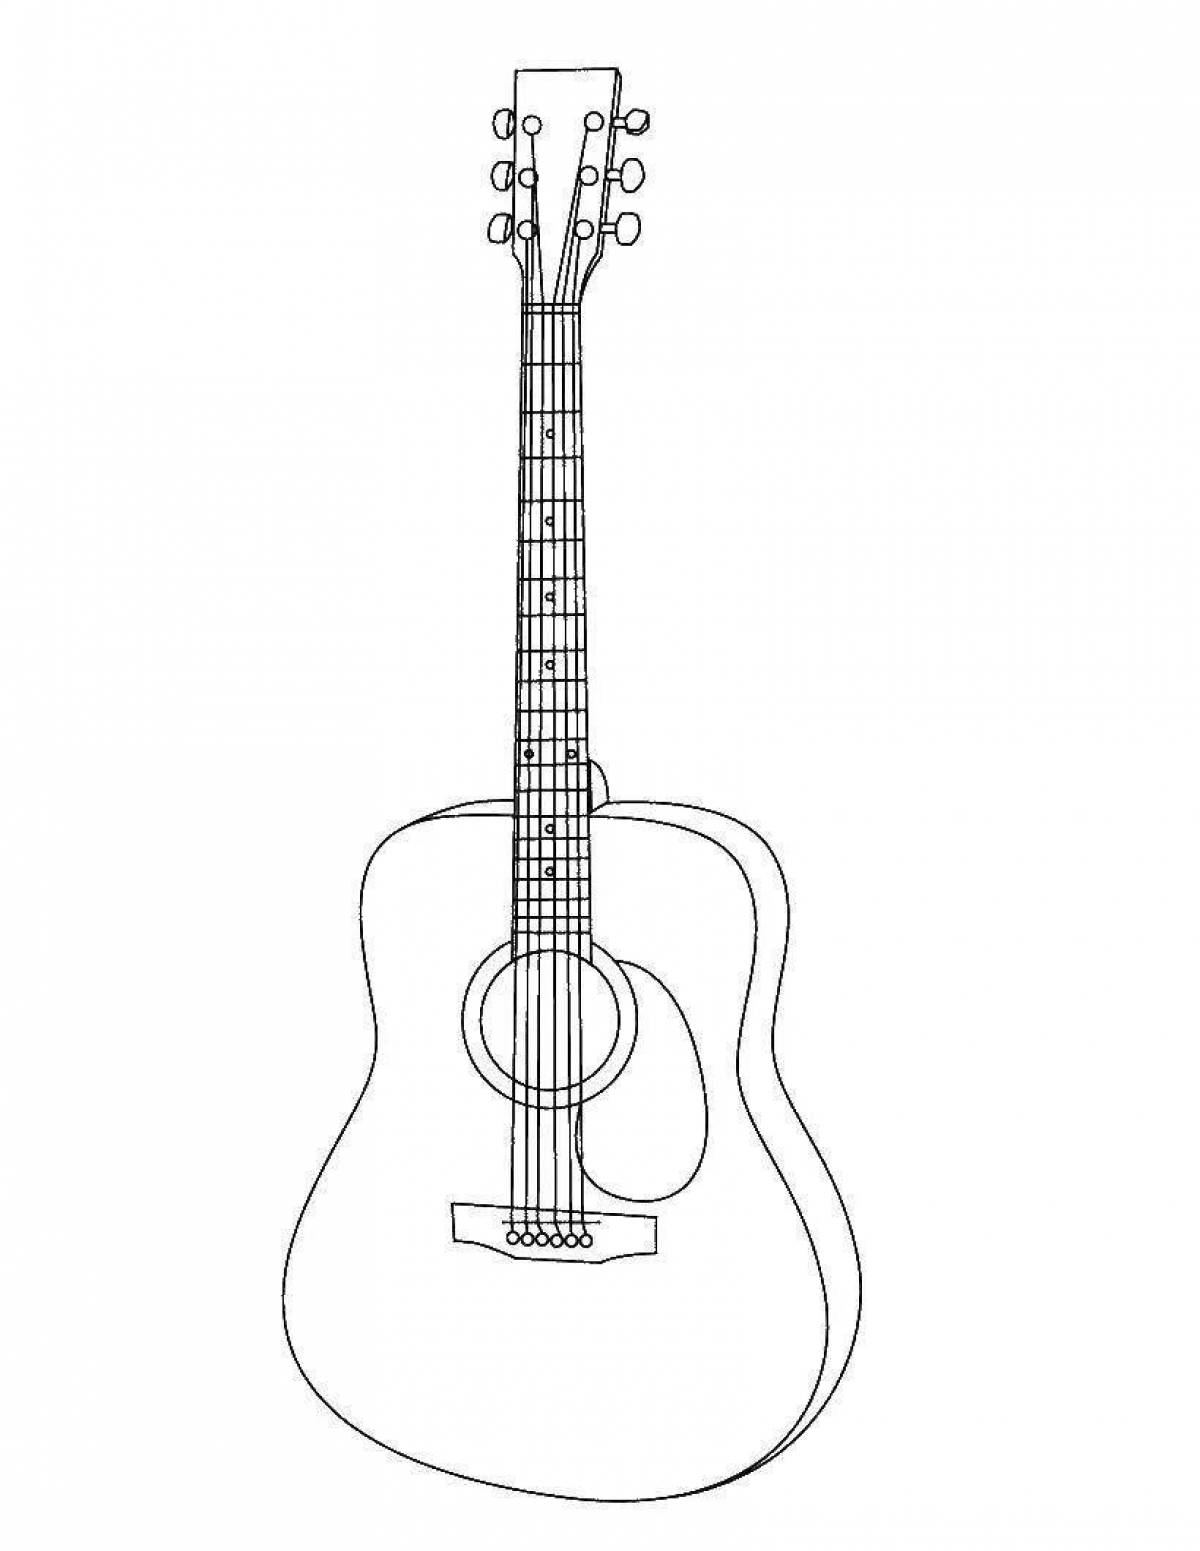 Intricate guitar drawing